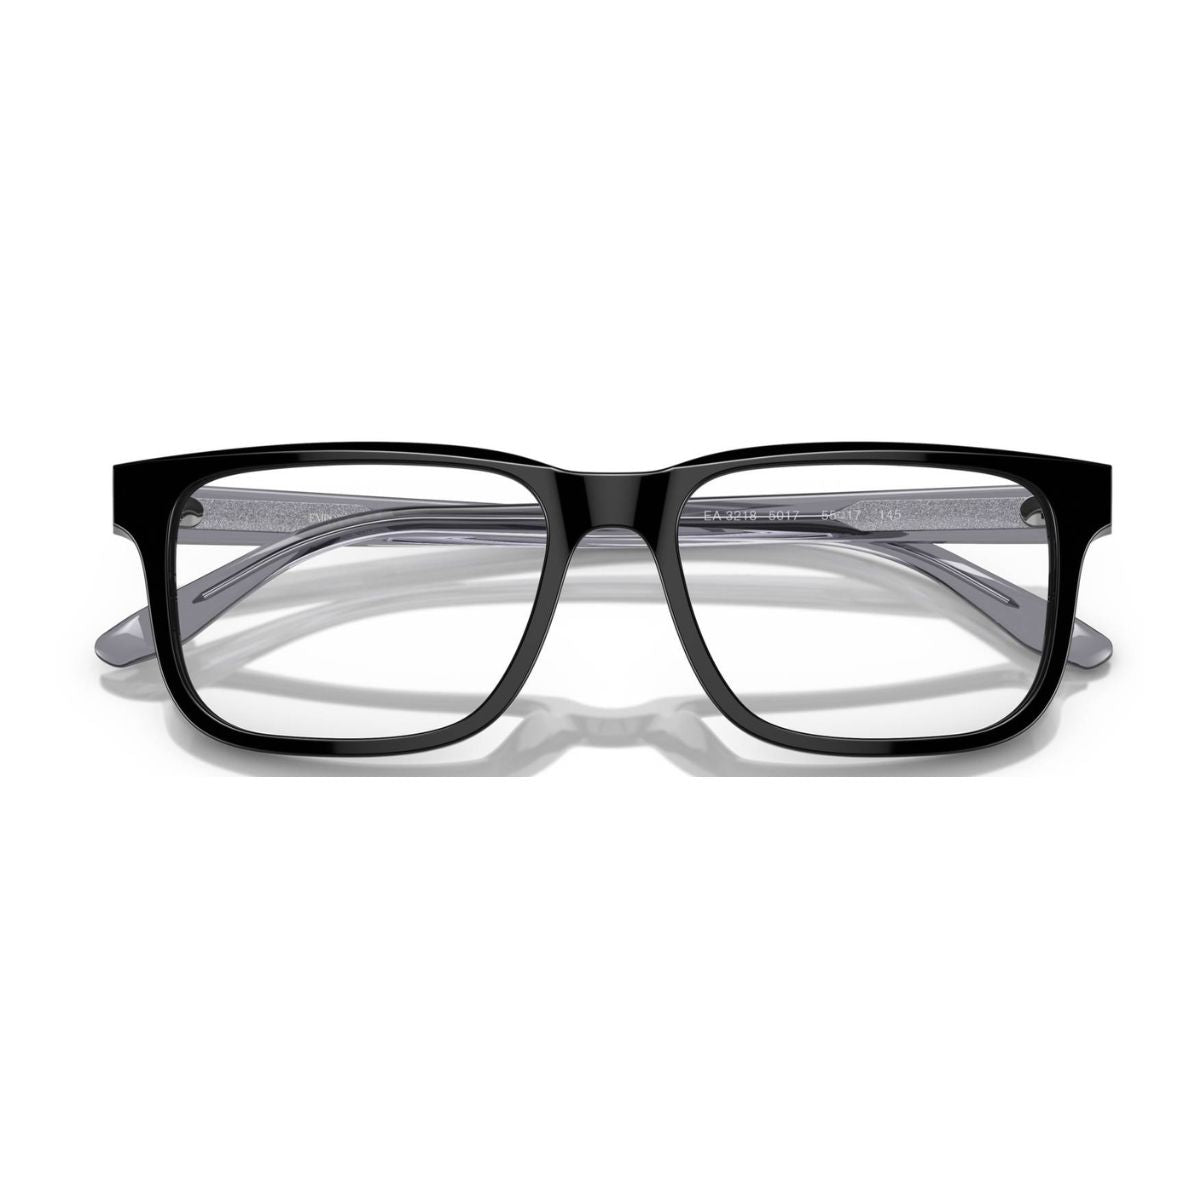 "Buy Online Emporio Armani 3218 5017 Optical Eye Glasses Frame At Optorium"